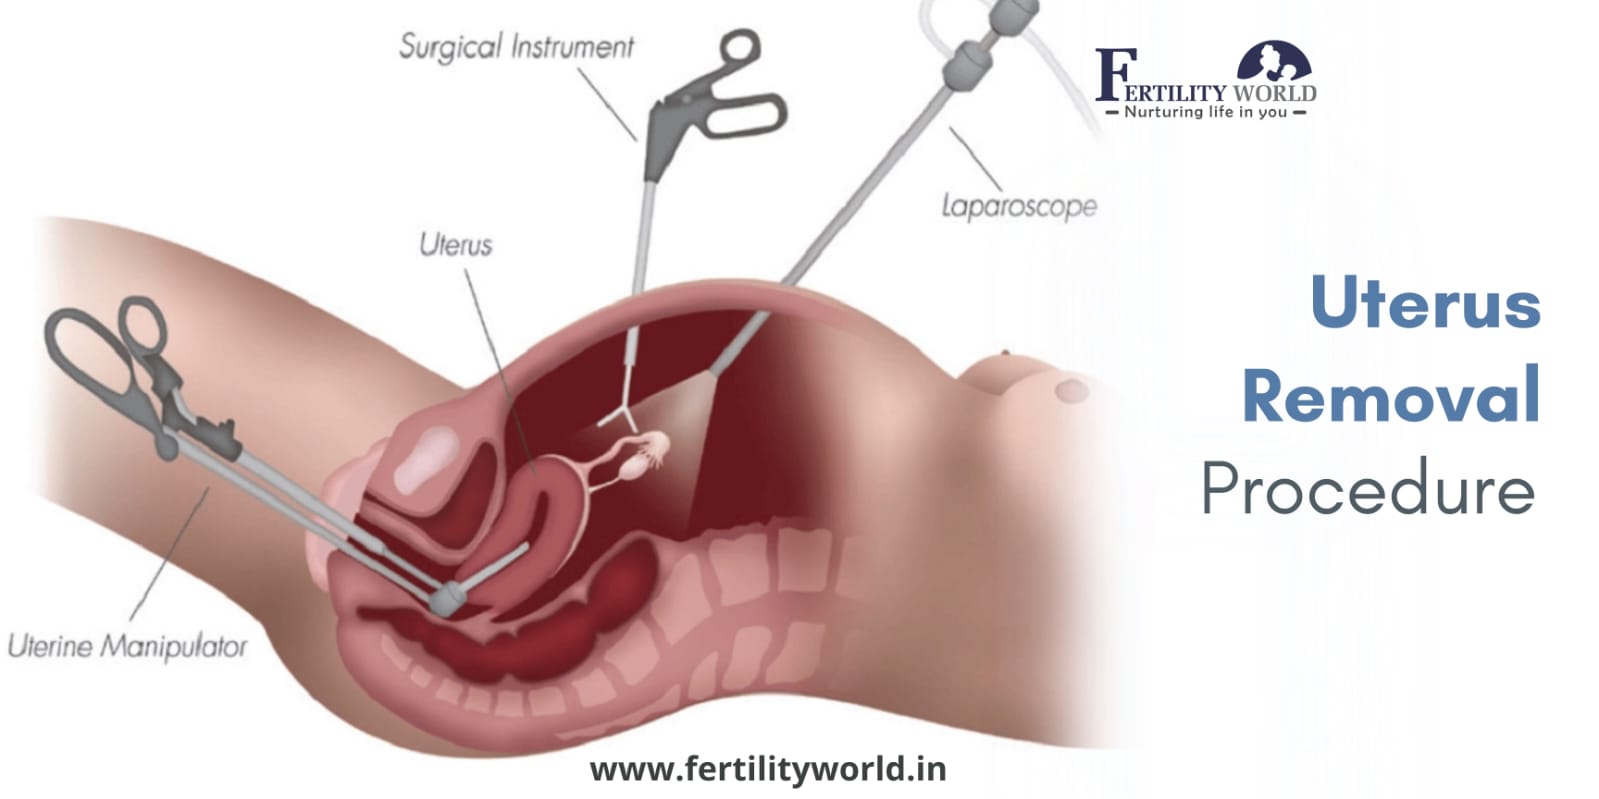 How is the uterus removed via Laparoscopic surgery?